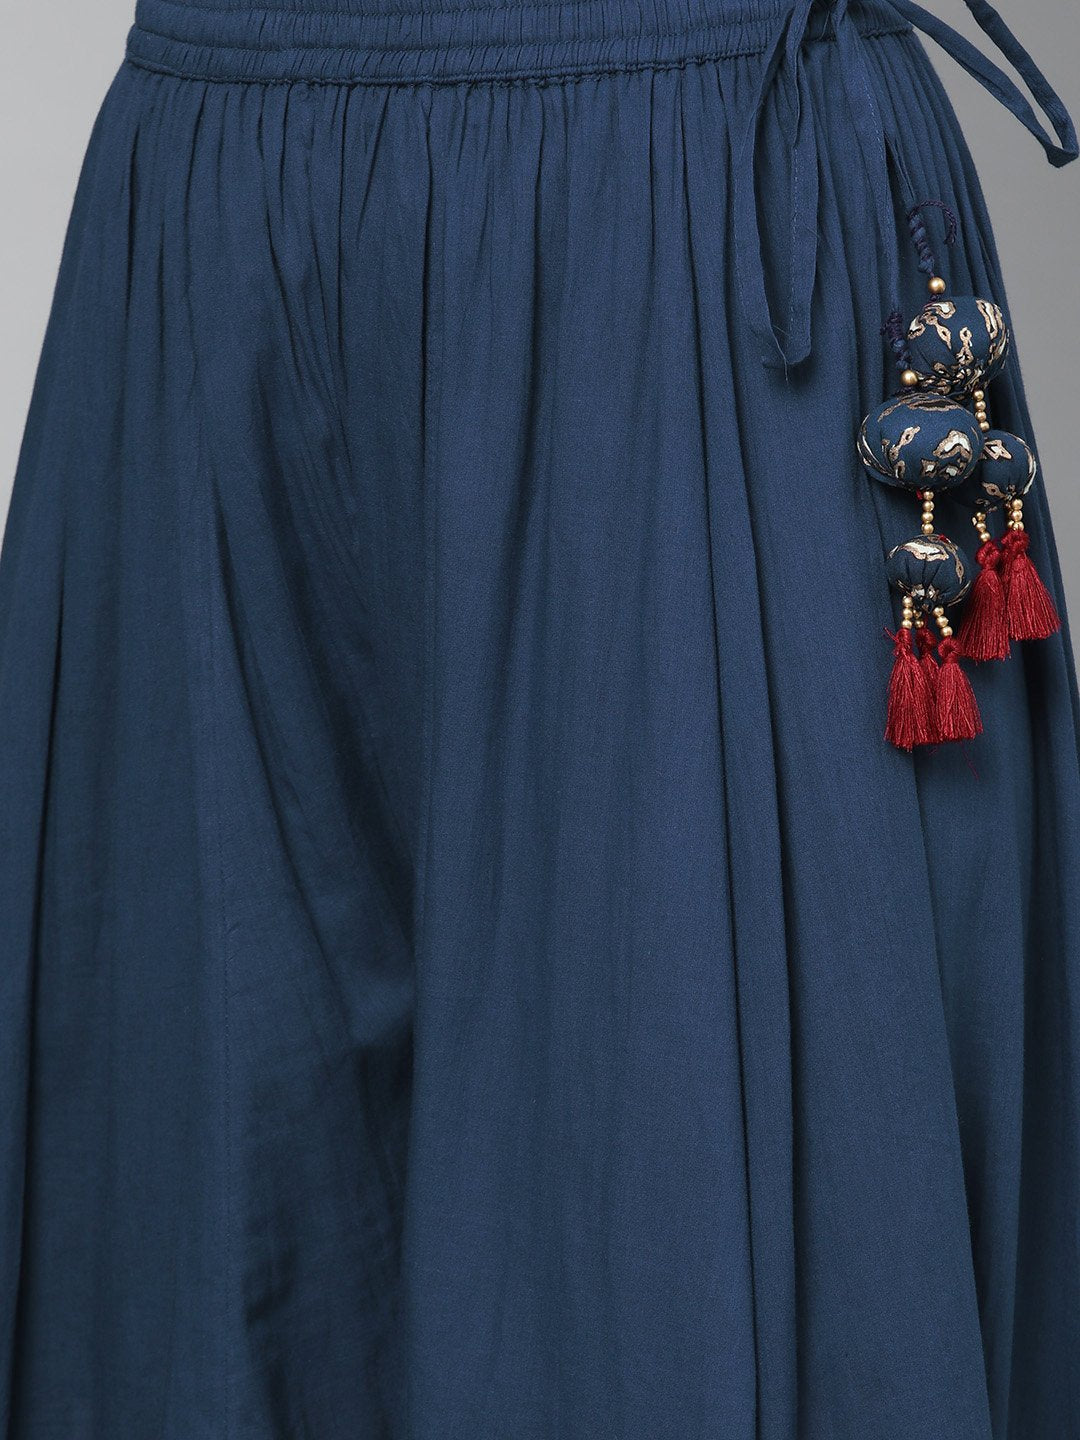 Ishin Women's Cotton Navy Blue Embroidered A-Line Kurta Palazzo Set